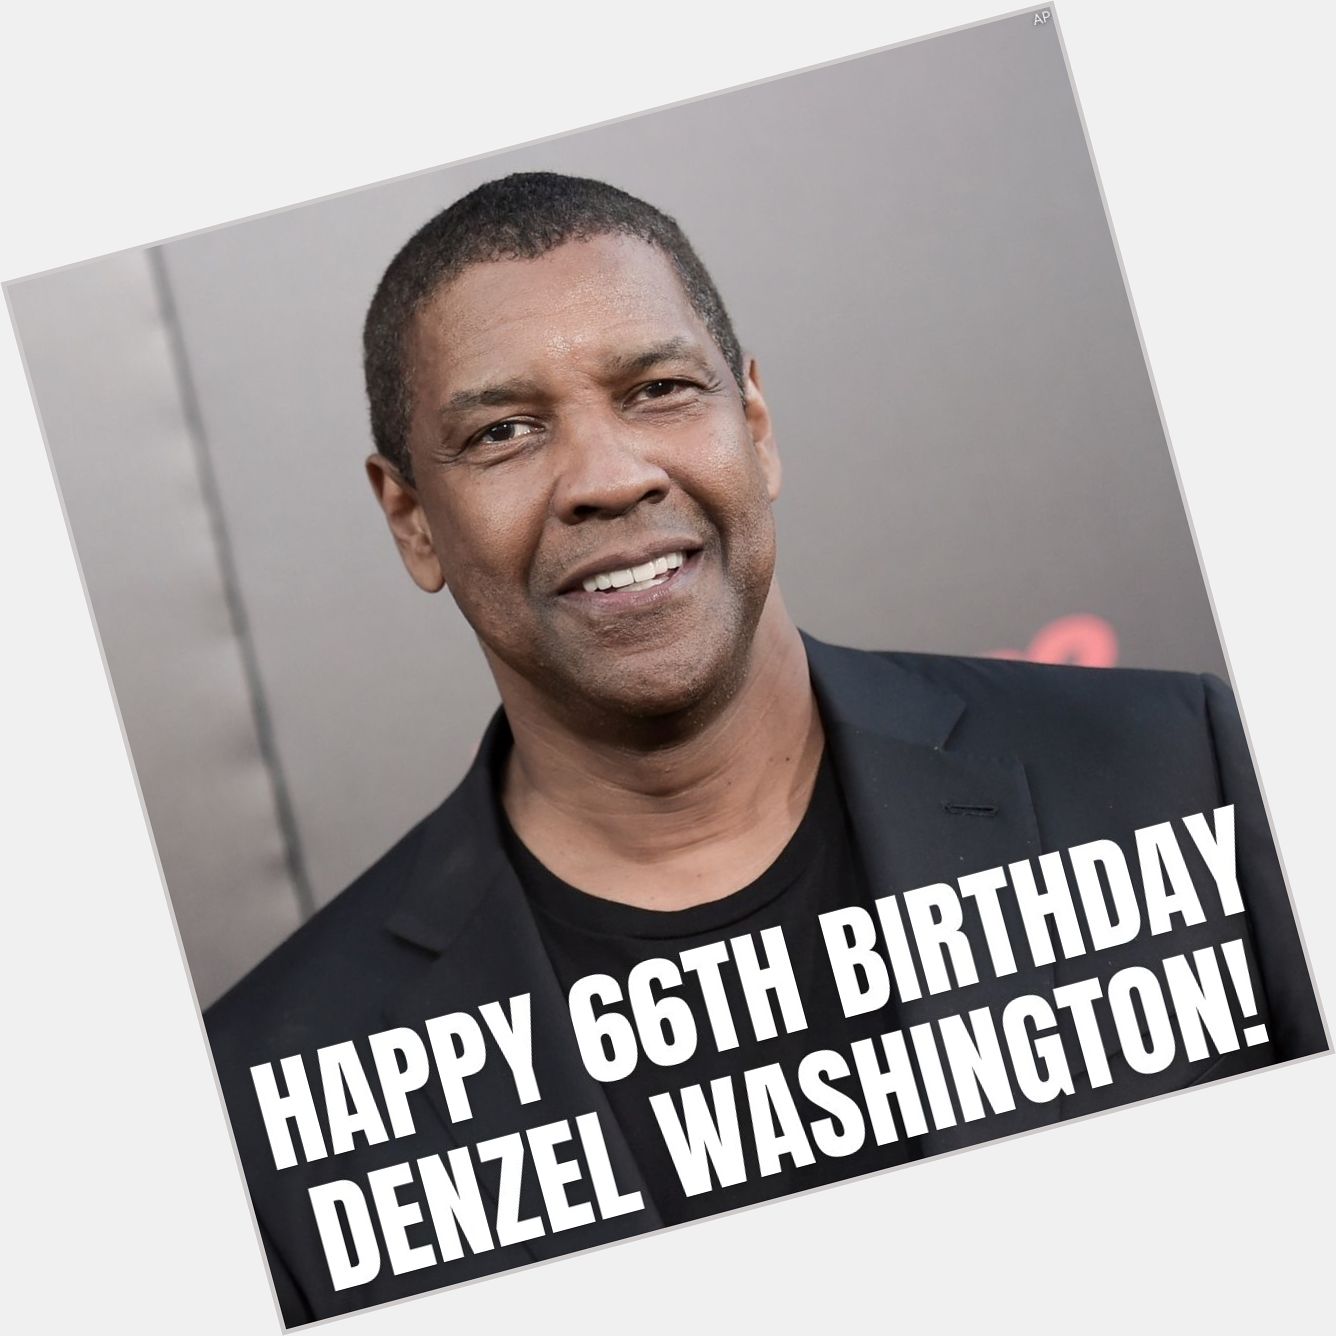  Happy Birthday! What\s your favorite Denzel Washington movie?  